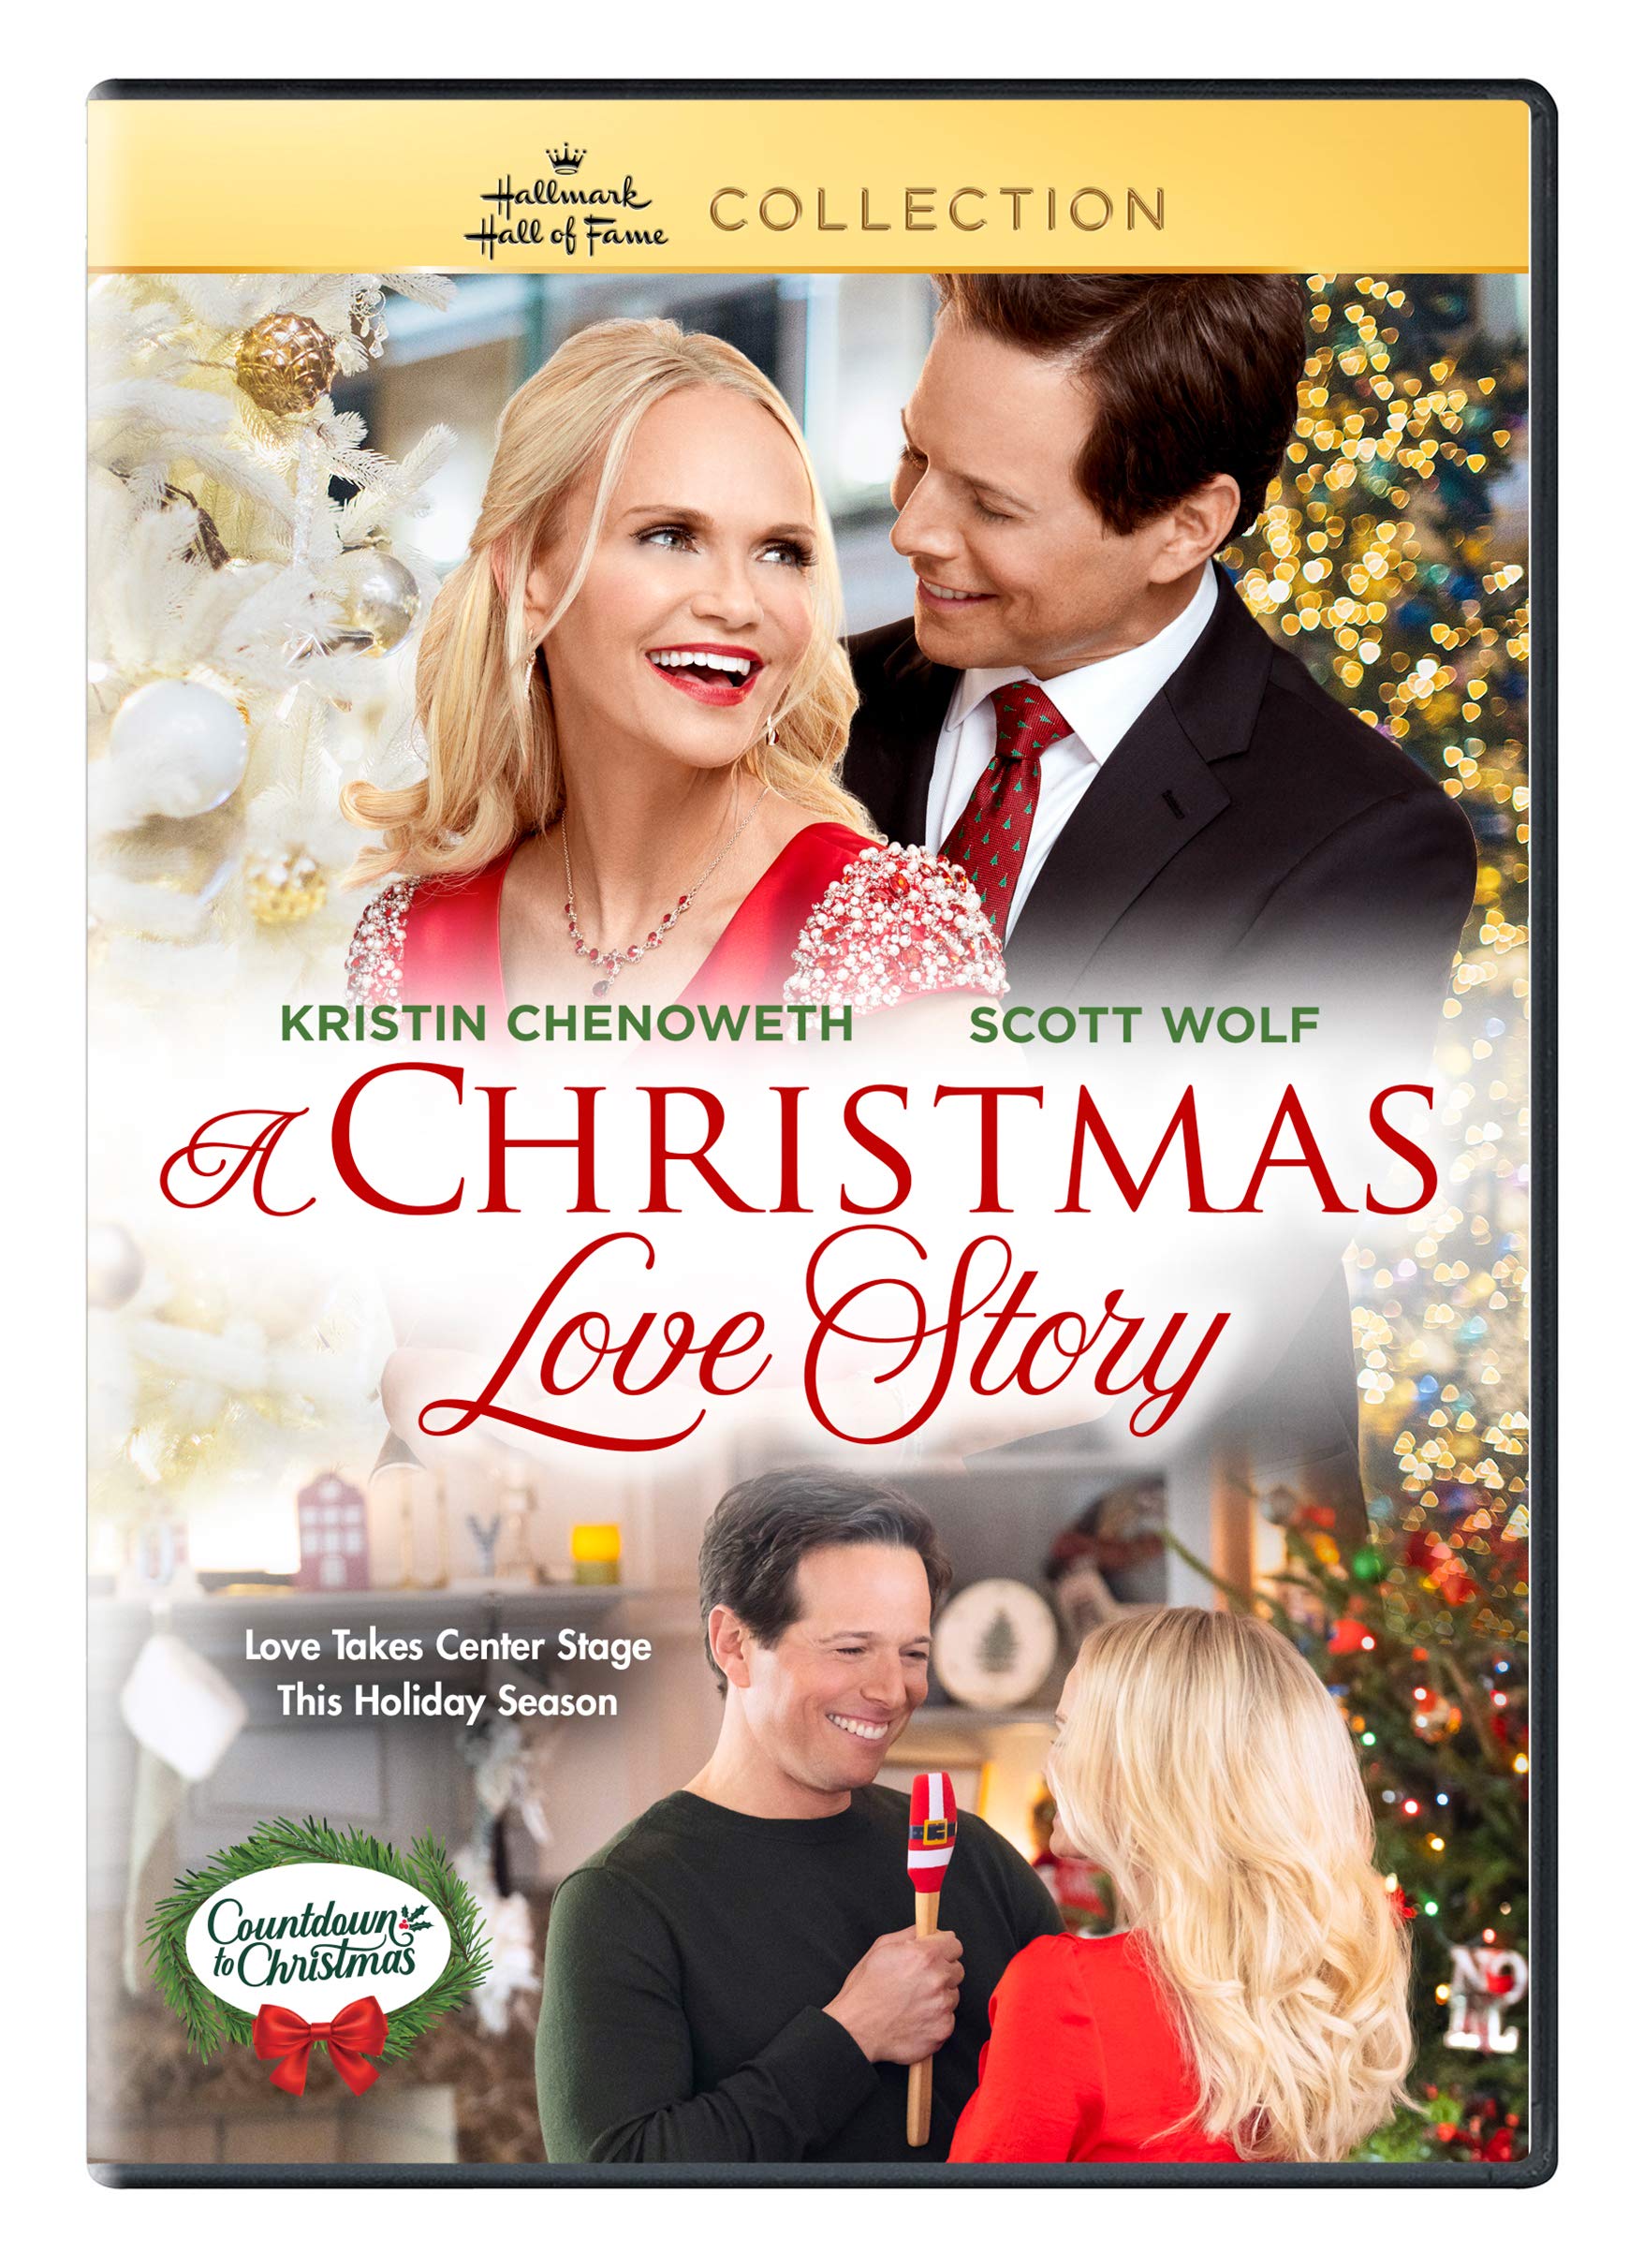 Christmas Love Story on MovieShack